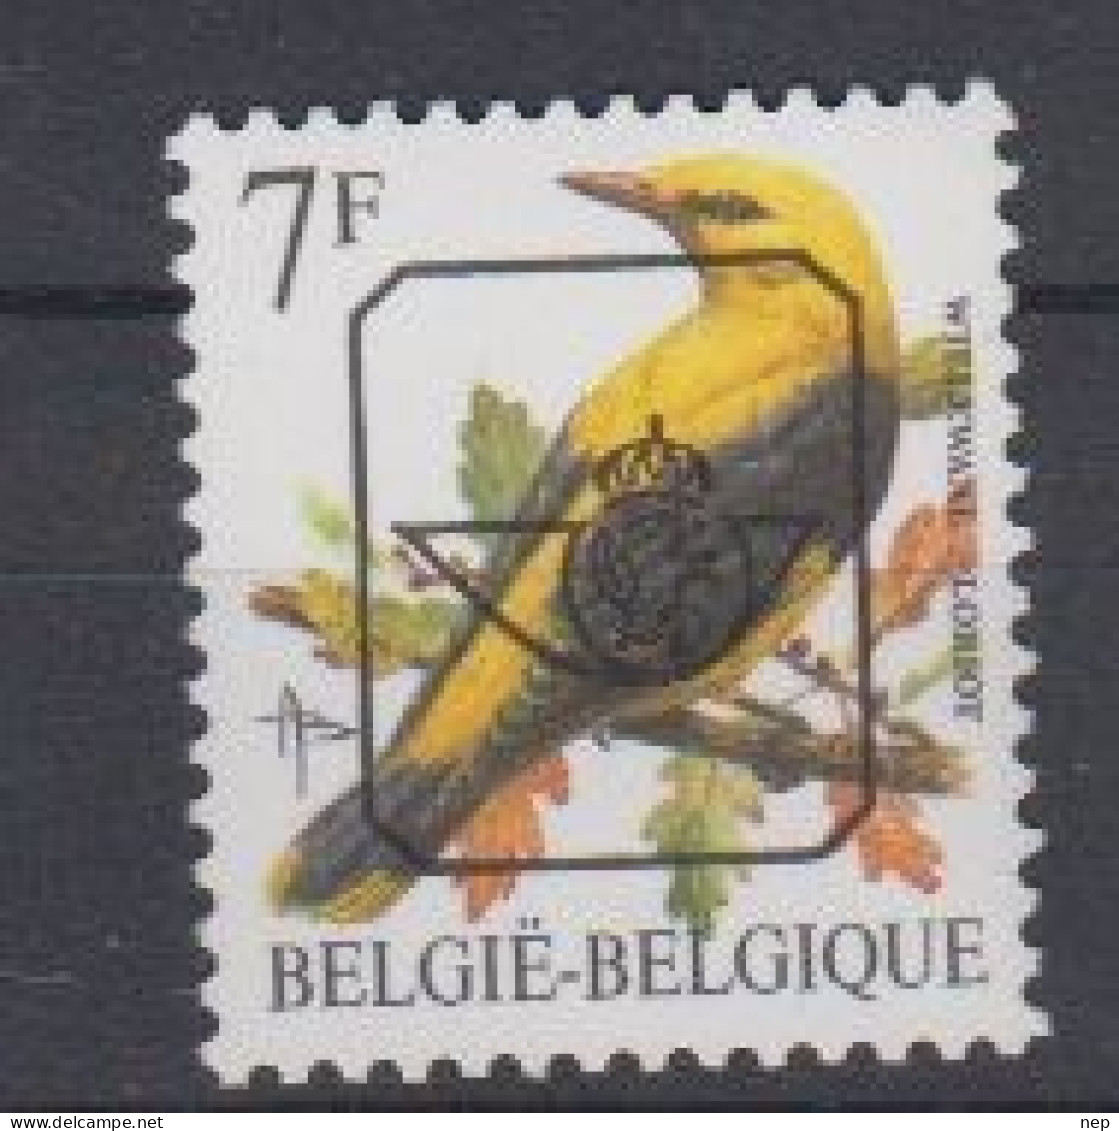 BELGIË - OBP - PREO - Nr 830 P8 - MNH** - Typos 1986-96 (Oiseaux)